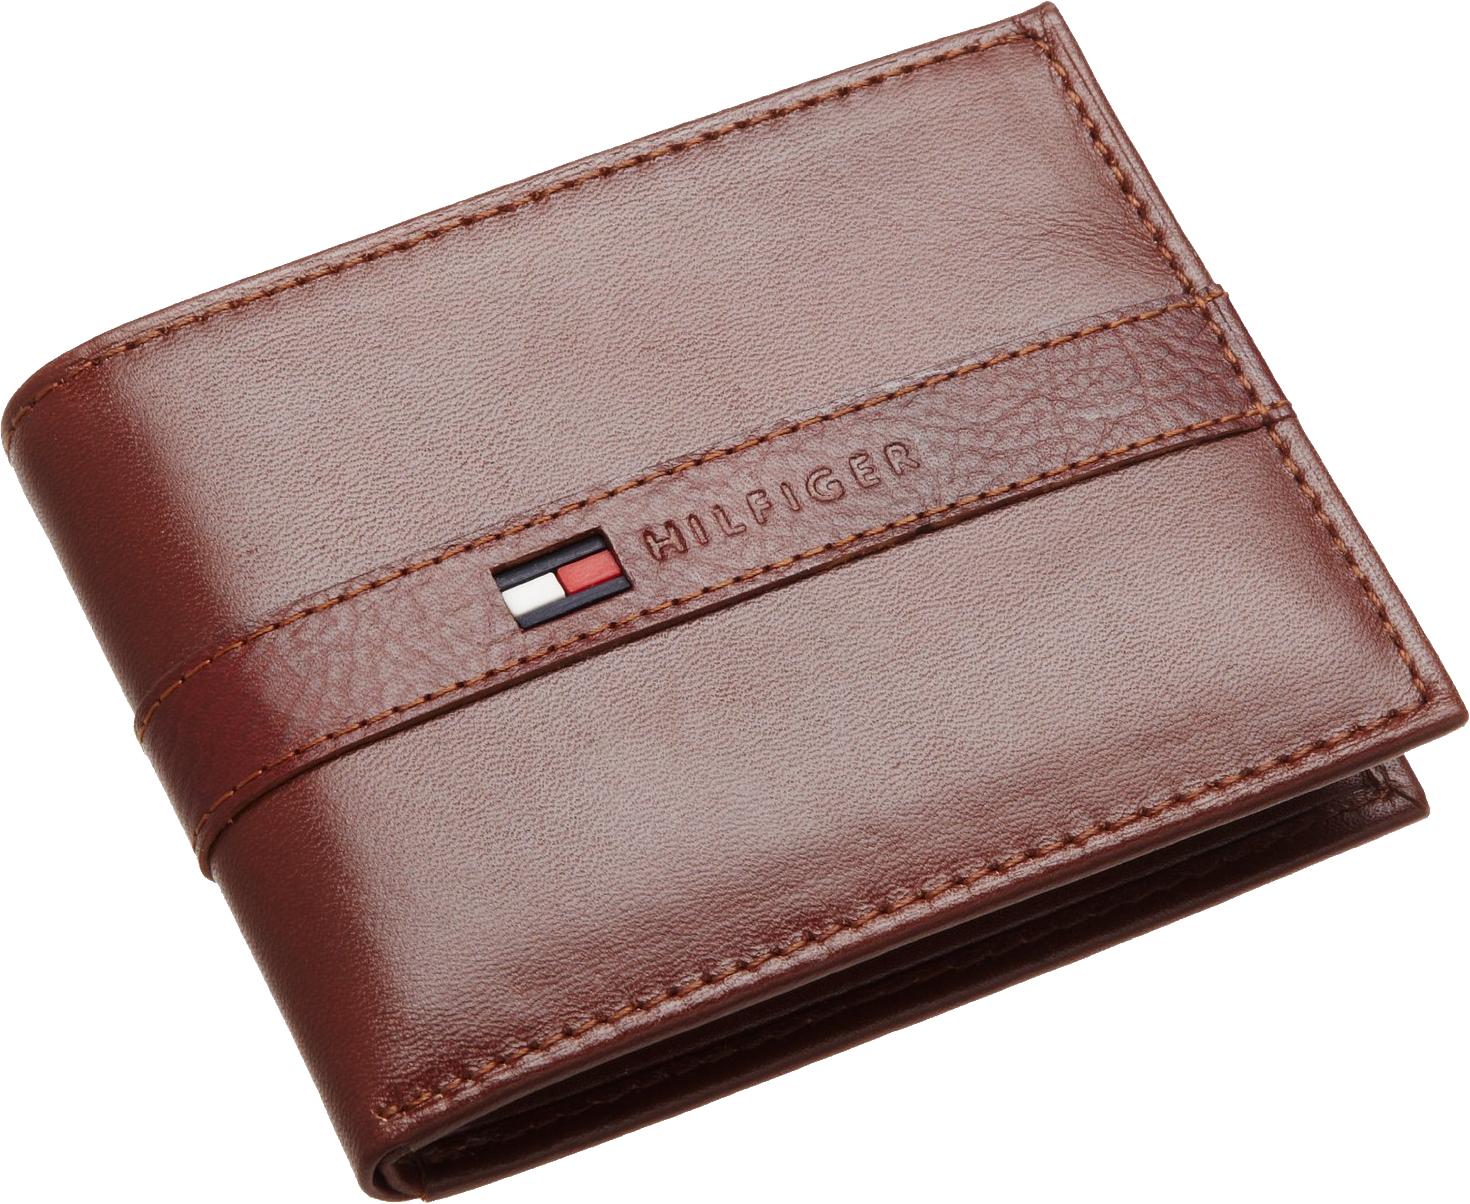 Wallet PNG - 21555